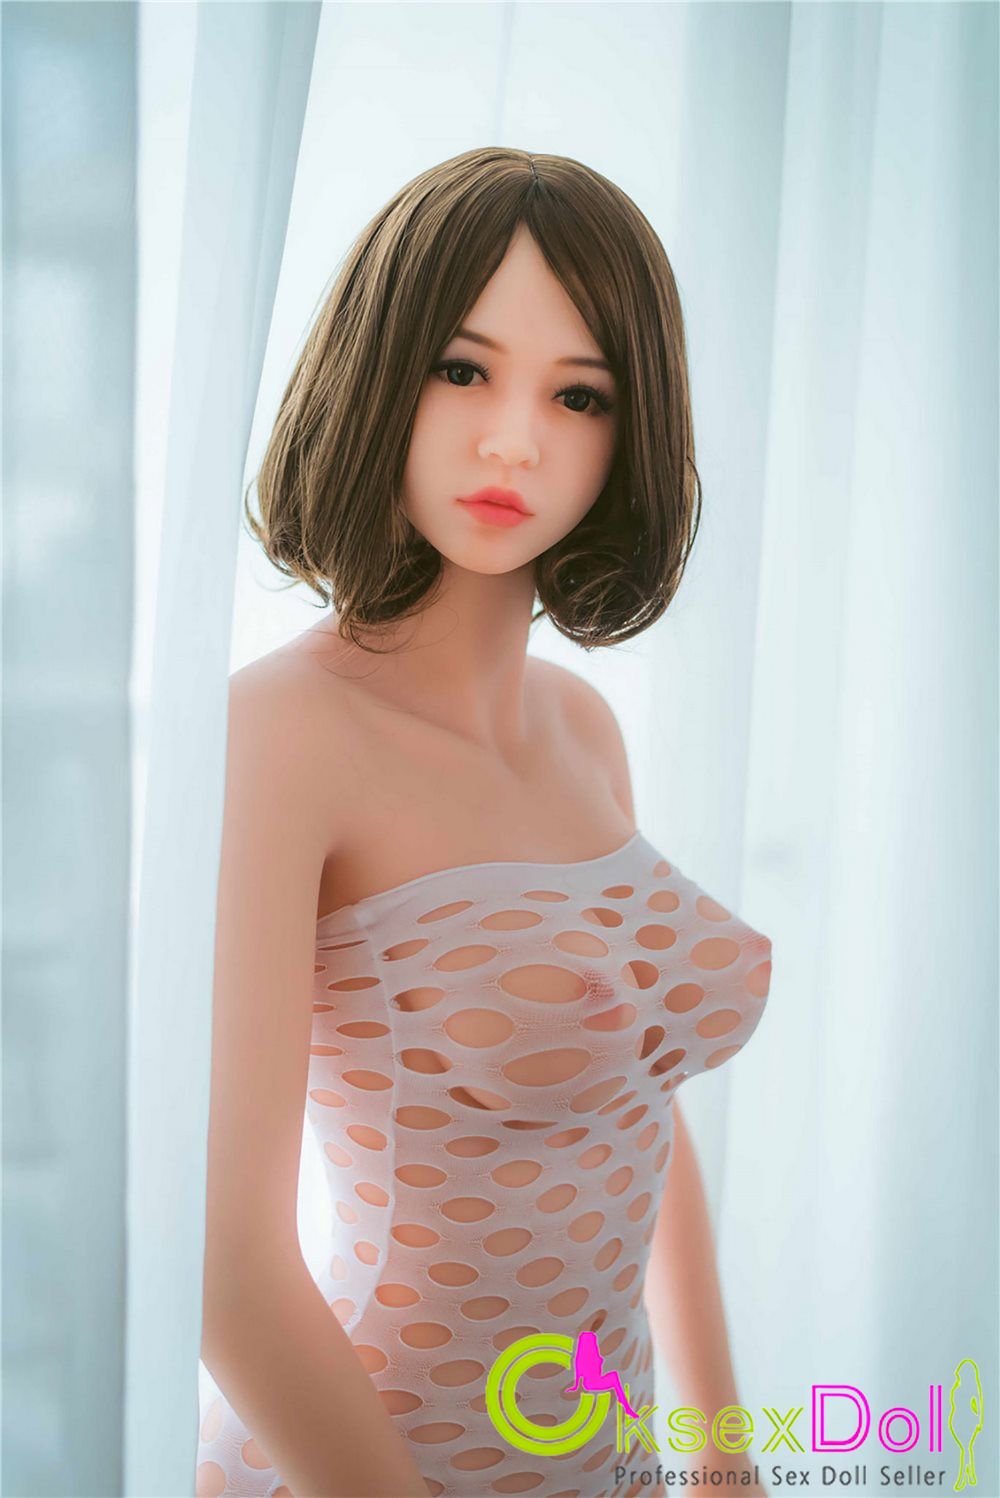 Chiyoko Girl Sex Doll Pics